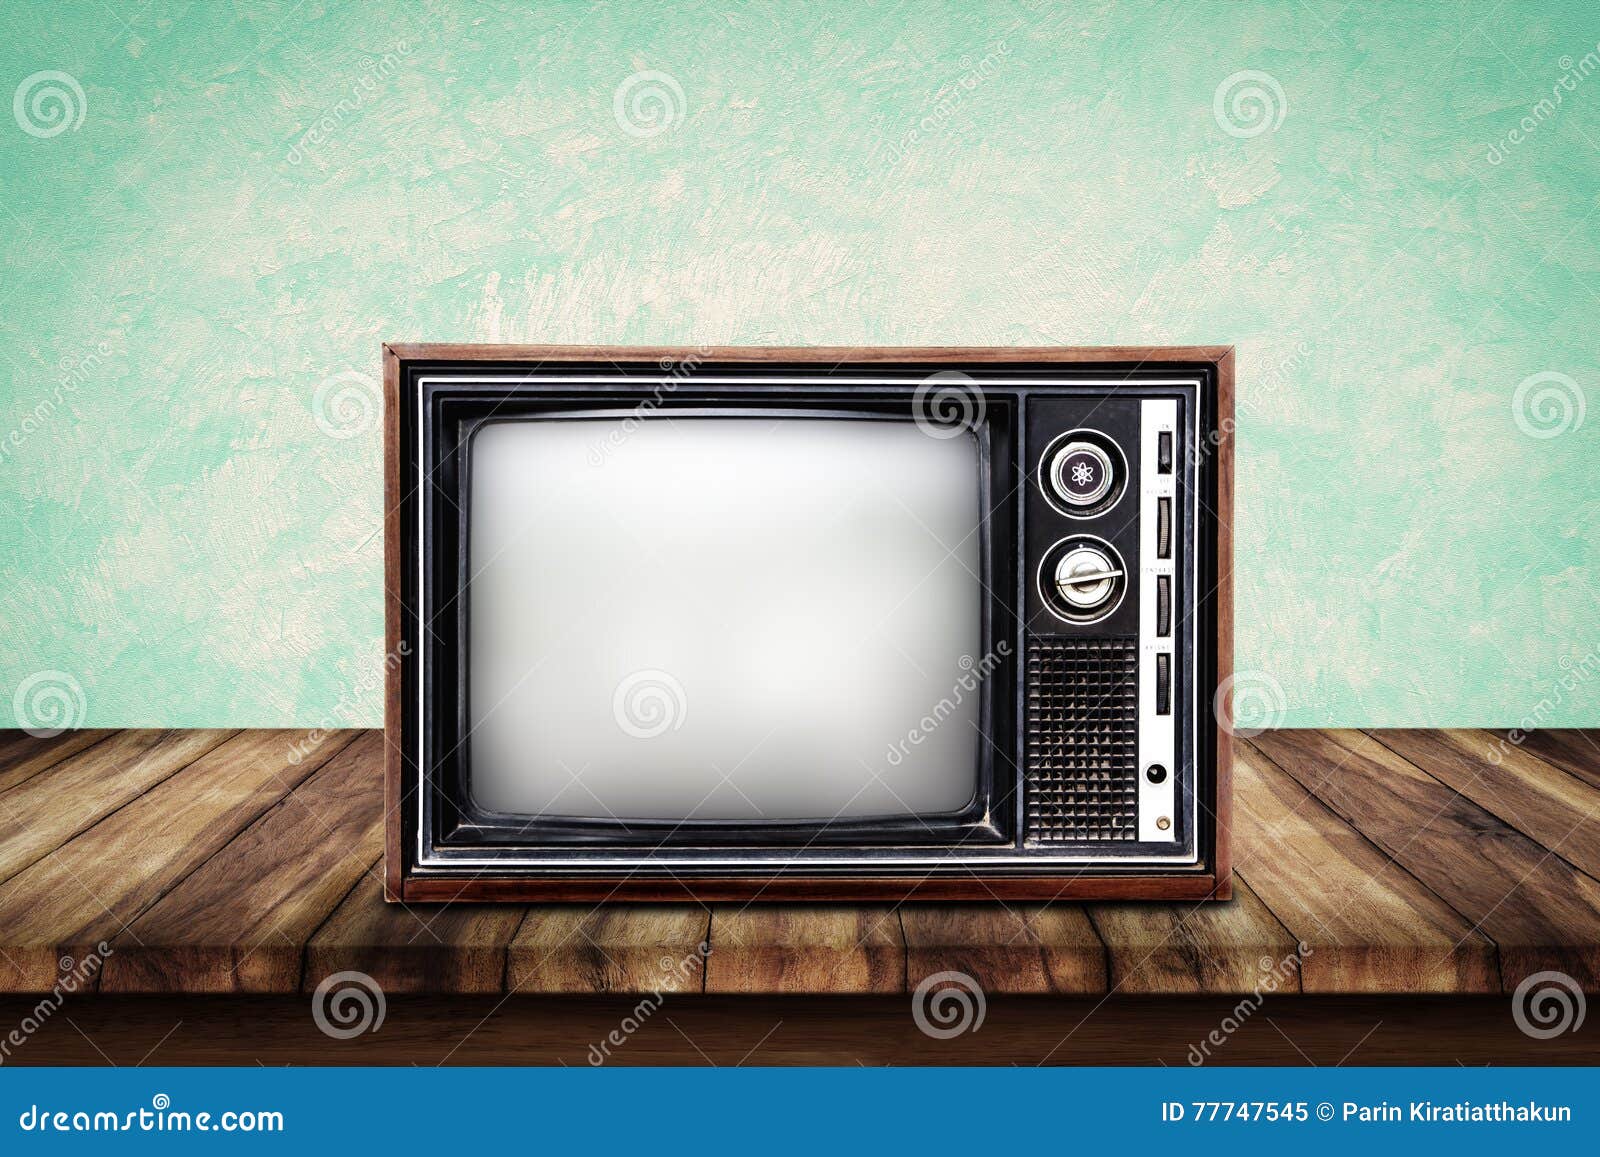 Телевизор кв 1. Старый телевизор. Старый телевизор стекло. Старый квадратный телевизор. Старый телевизор для фотошопа.